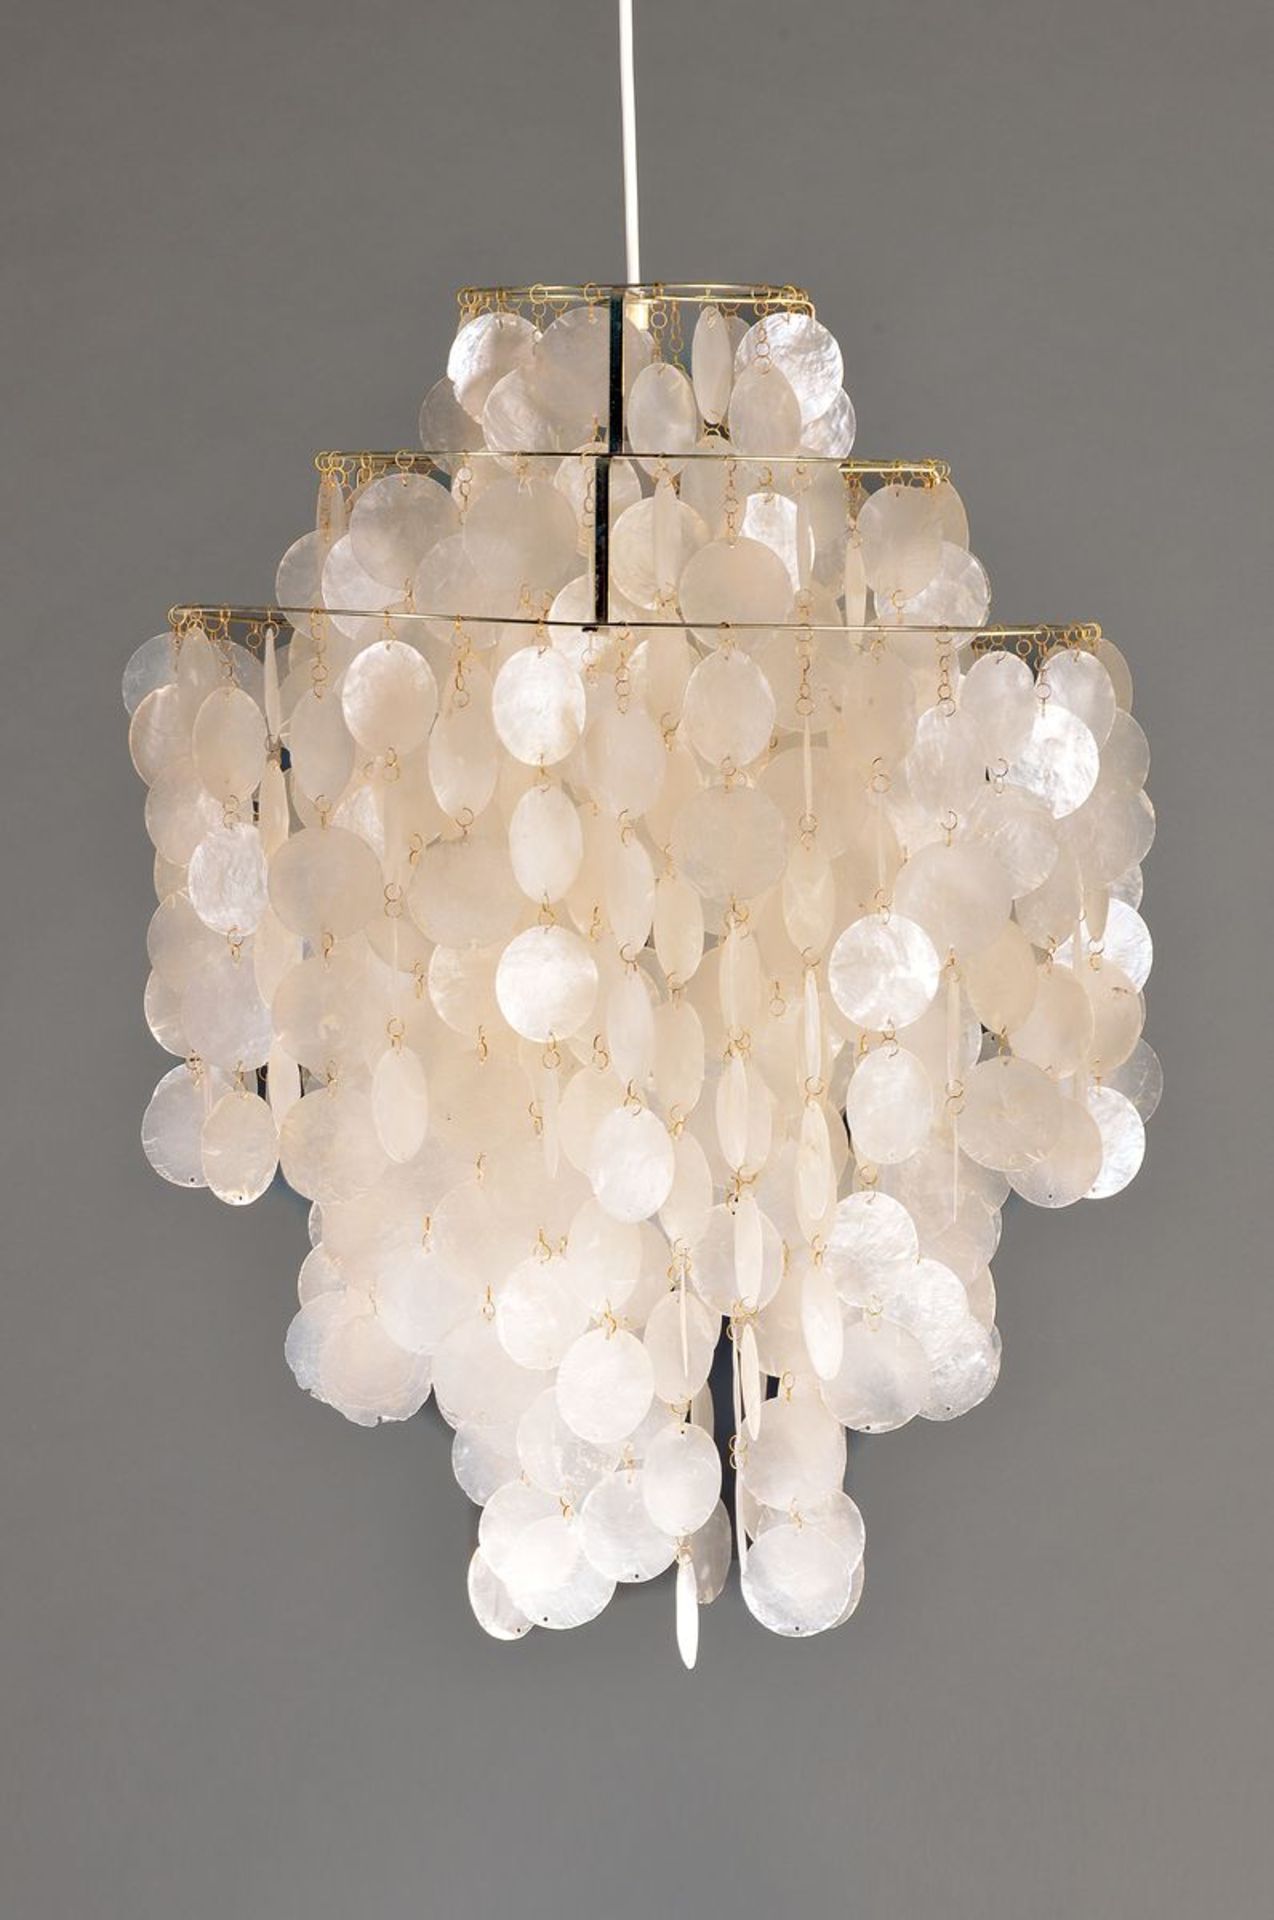 Ceiling lamp "Fun", designed by Verner Panton,1926-1998, chromed three-tier arrangement of metal